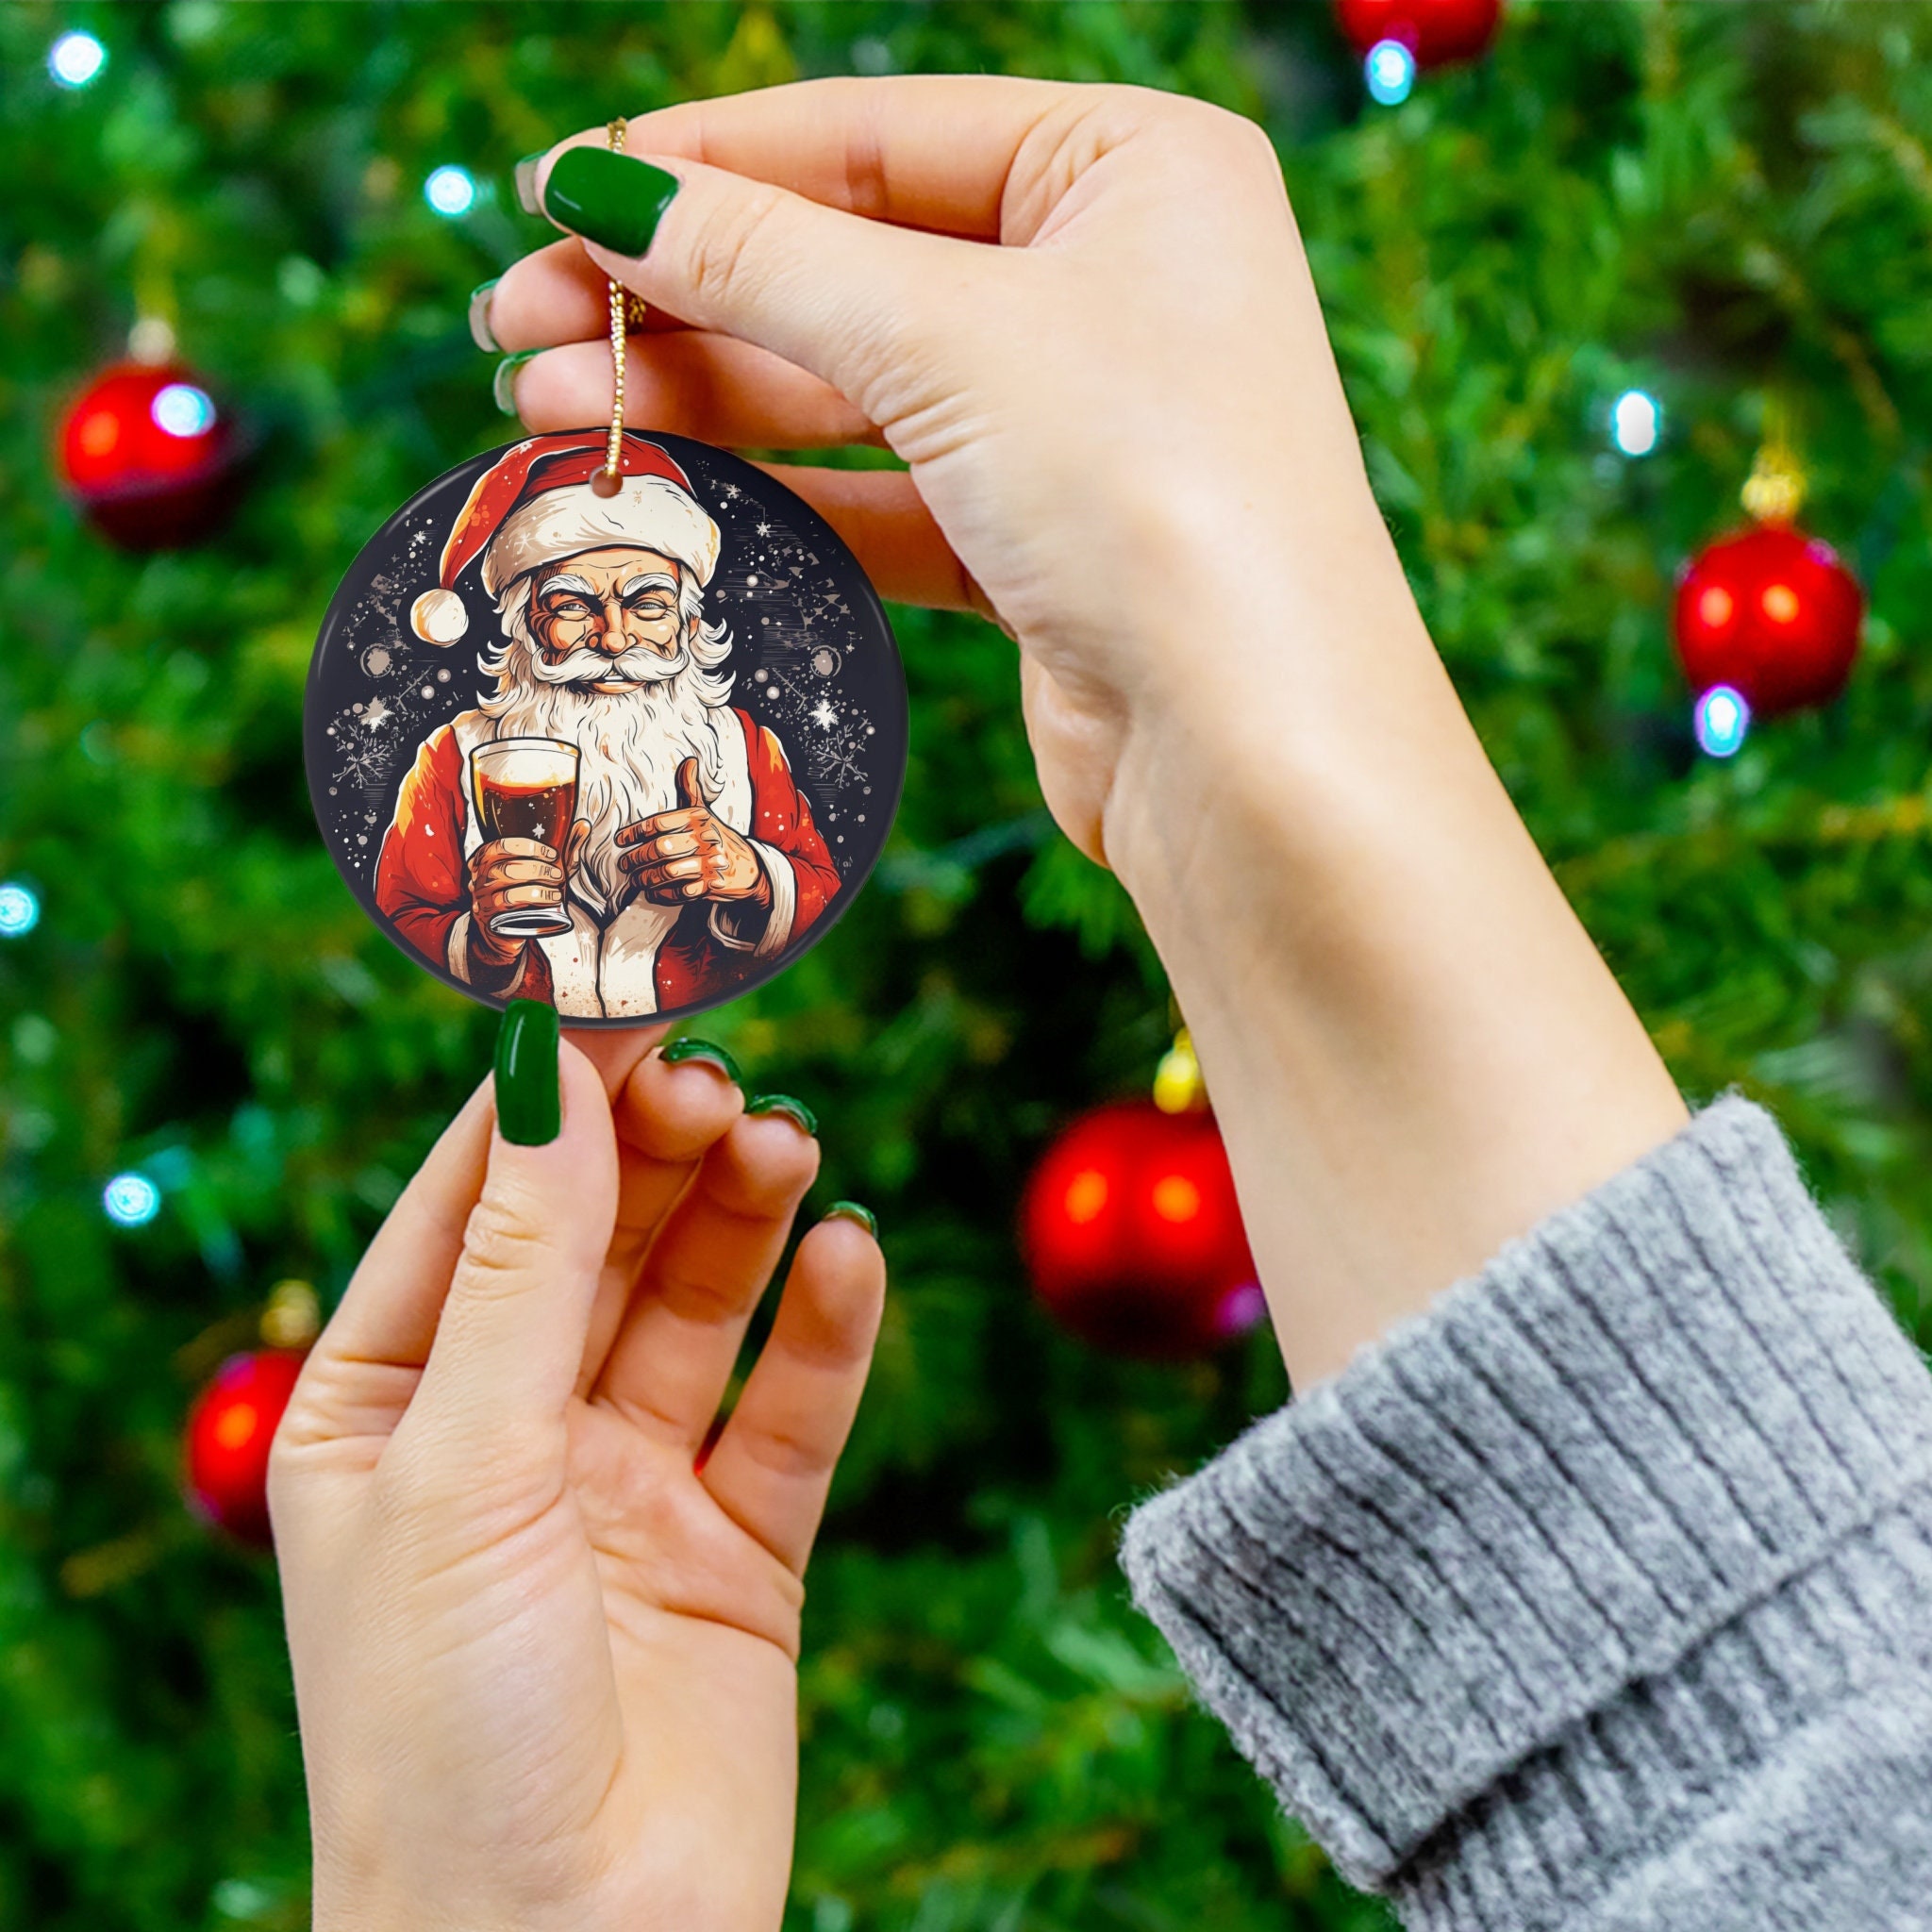 Easy Tiger Metal Christmas Ornament Santa Drinking Mug Beer Holidays Funny  Gifts